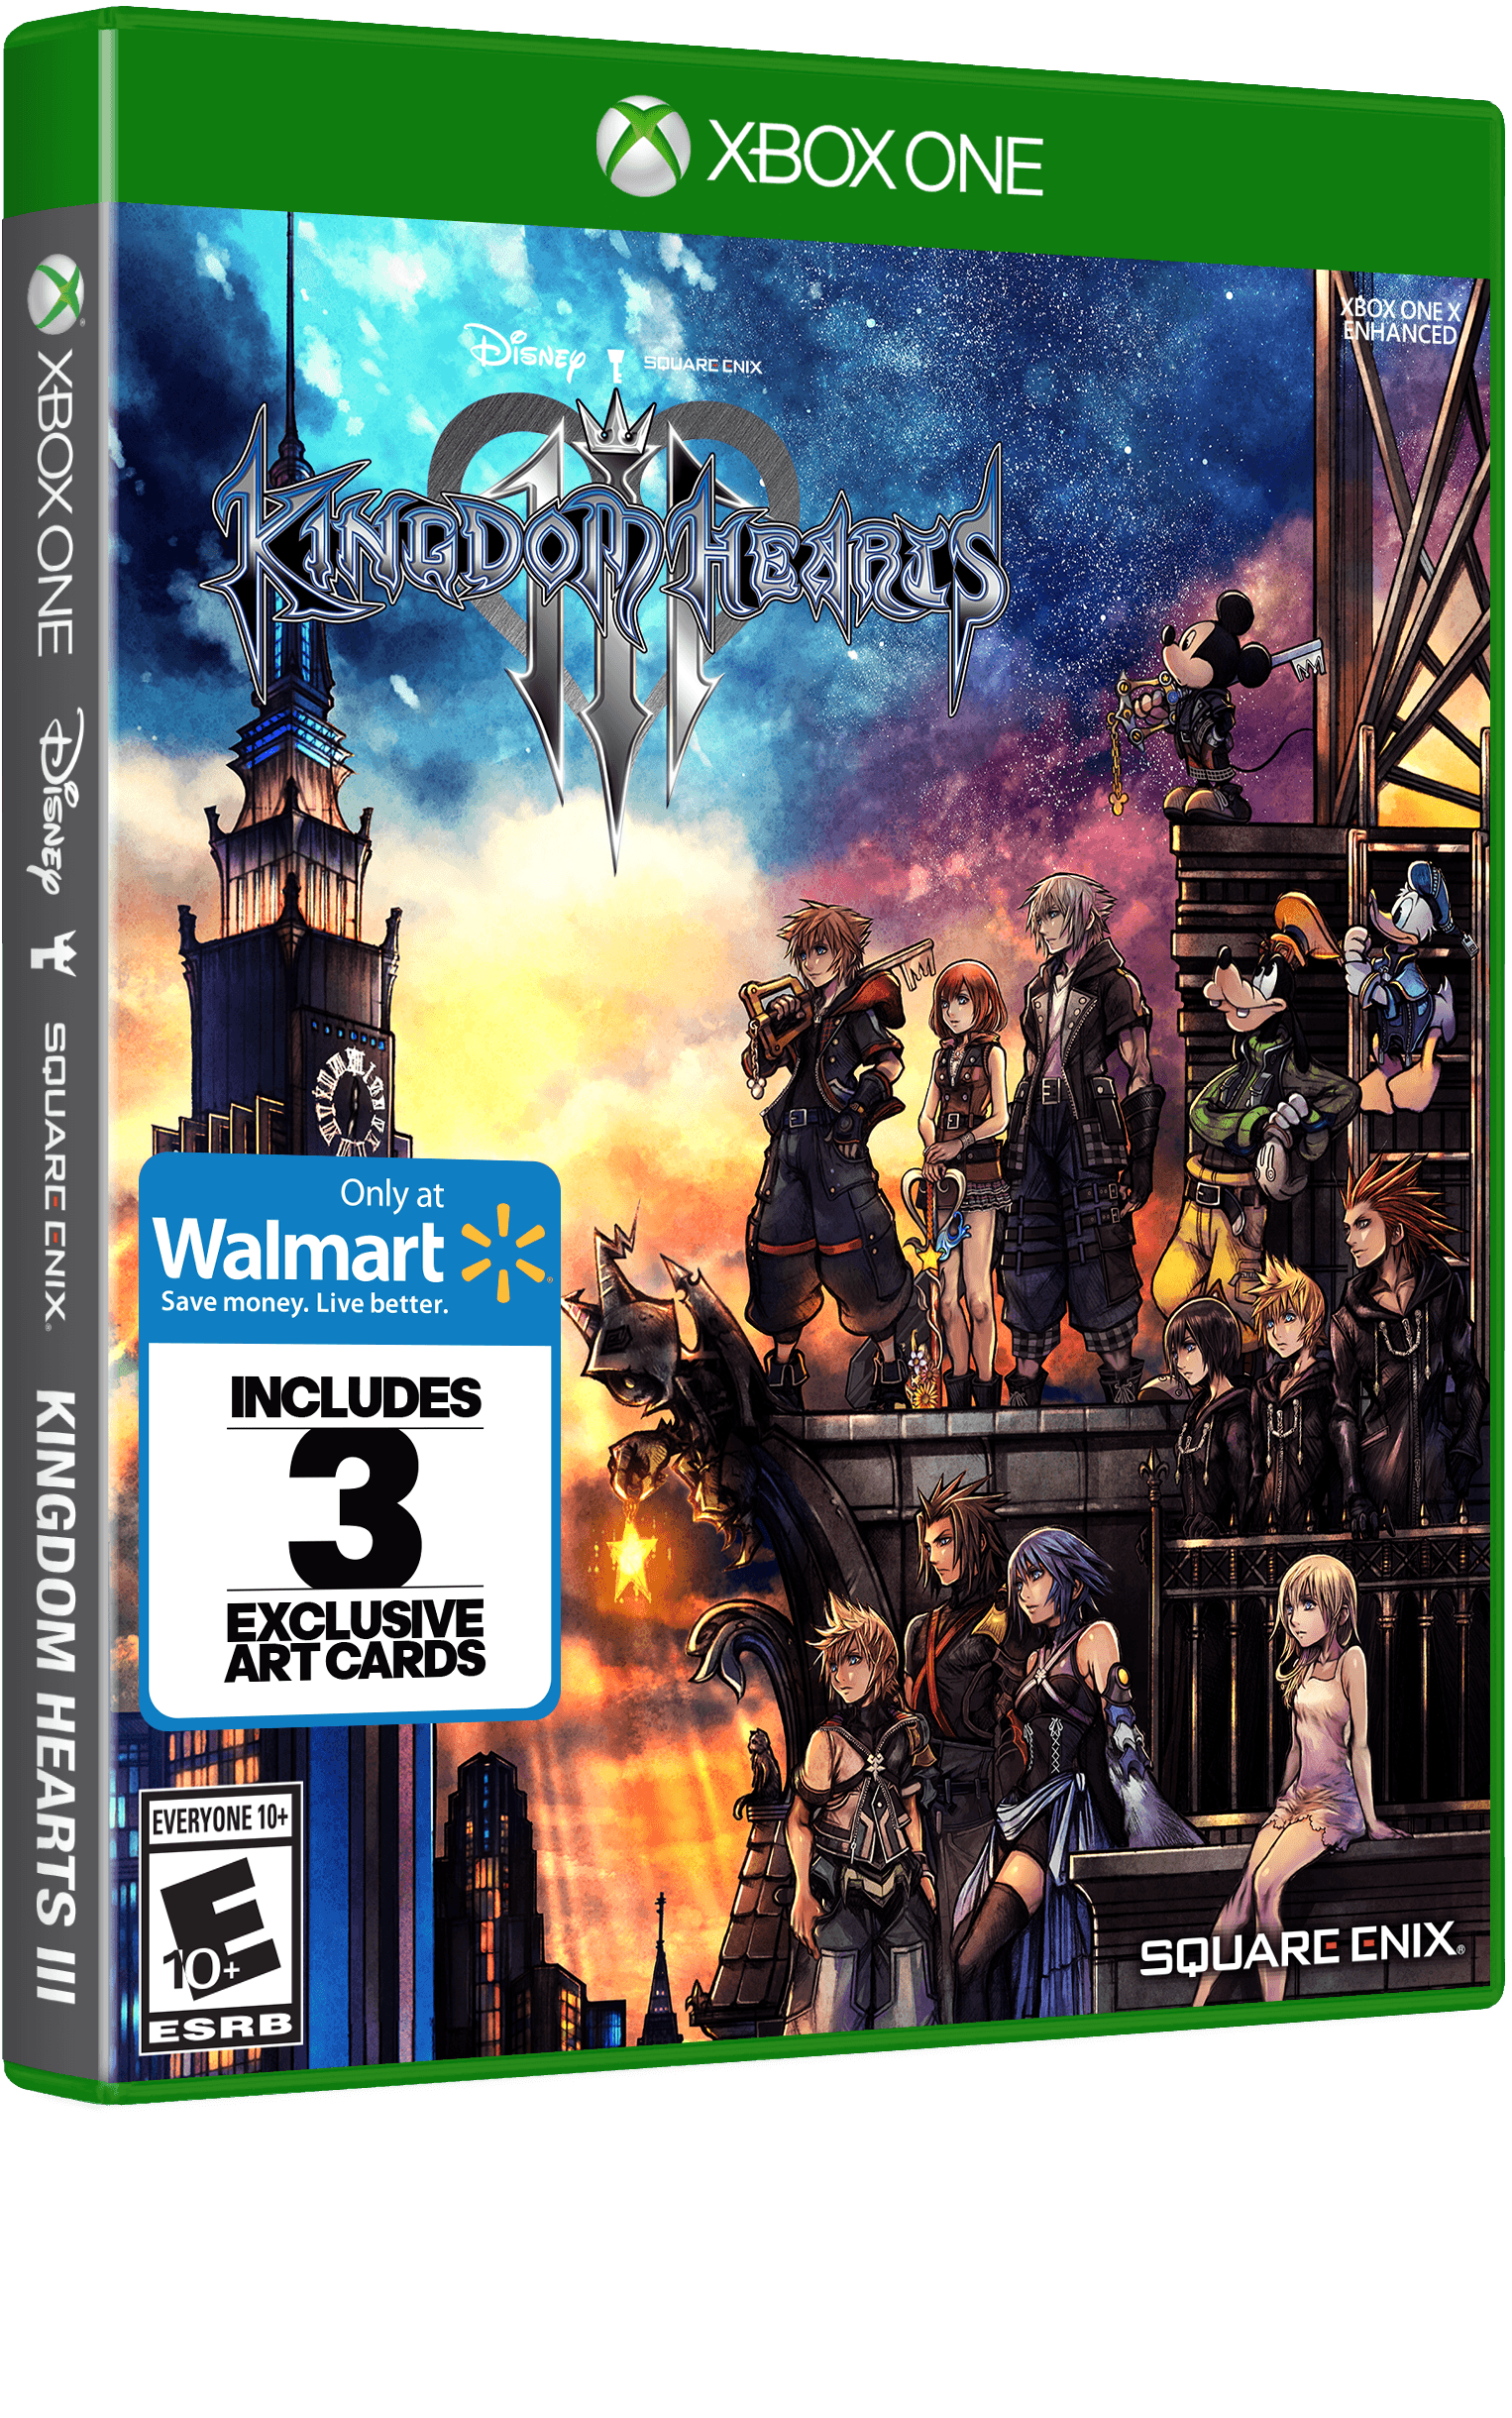 Walmart Exclusive: Kingdom Hearts 3, Square Enix, Xbox One, 662248921921 - image 1 of 41